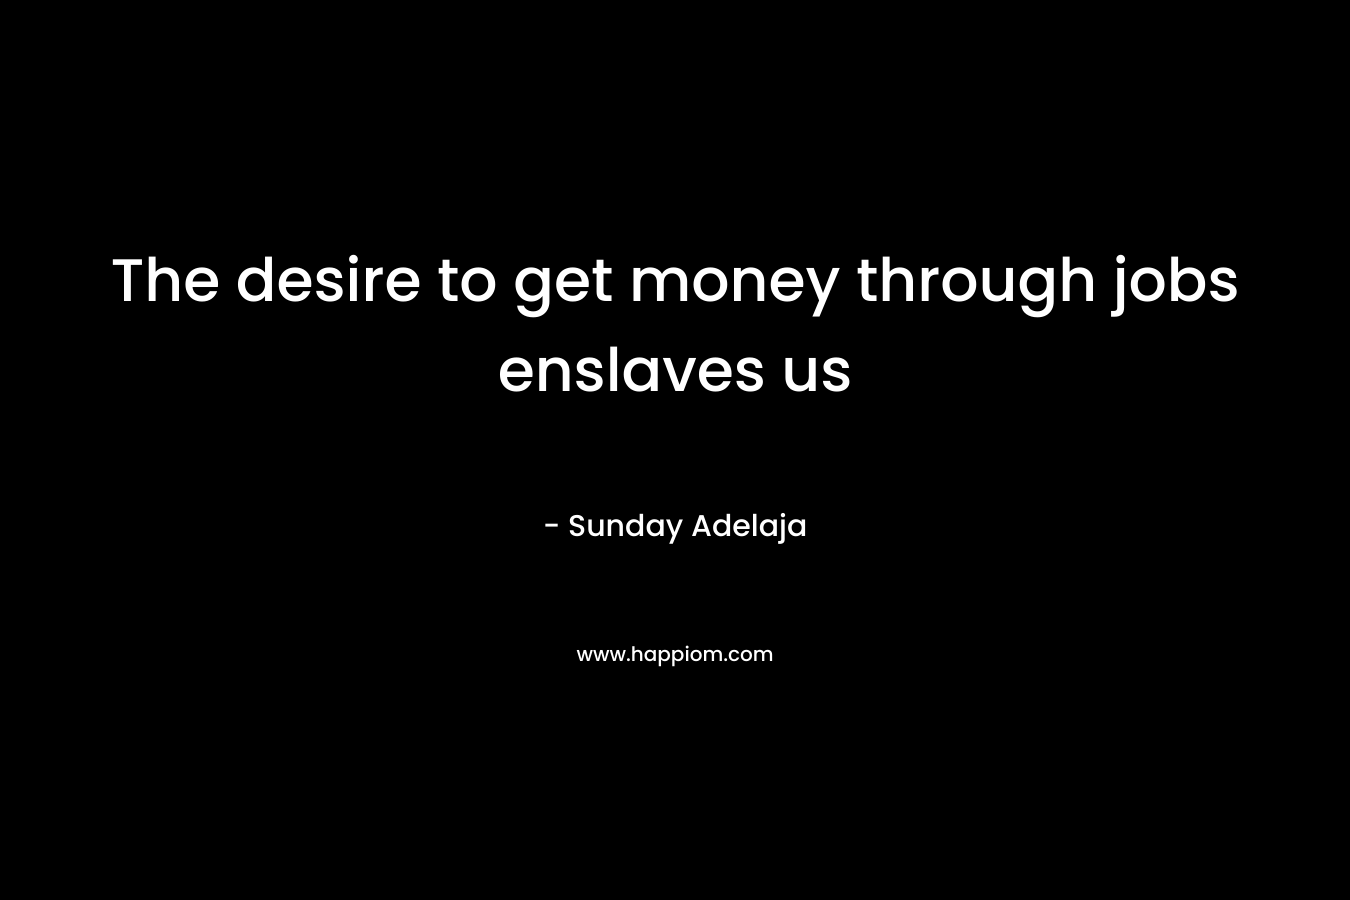 The desire to get money through jobs enslaves us